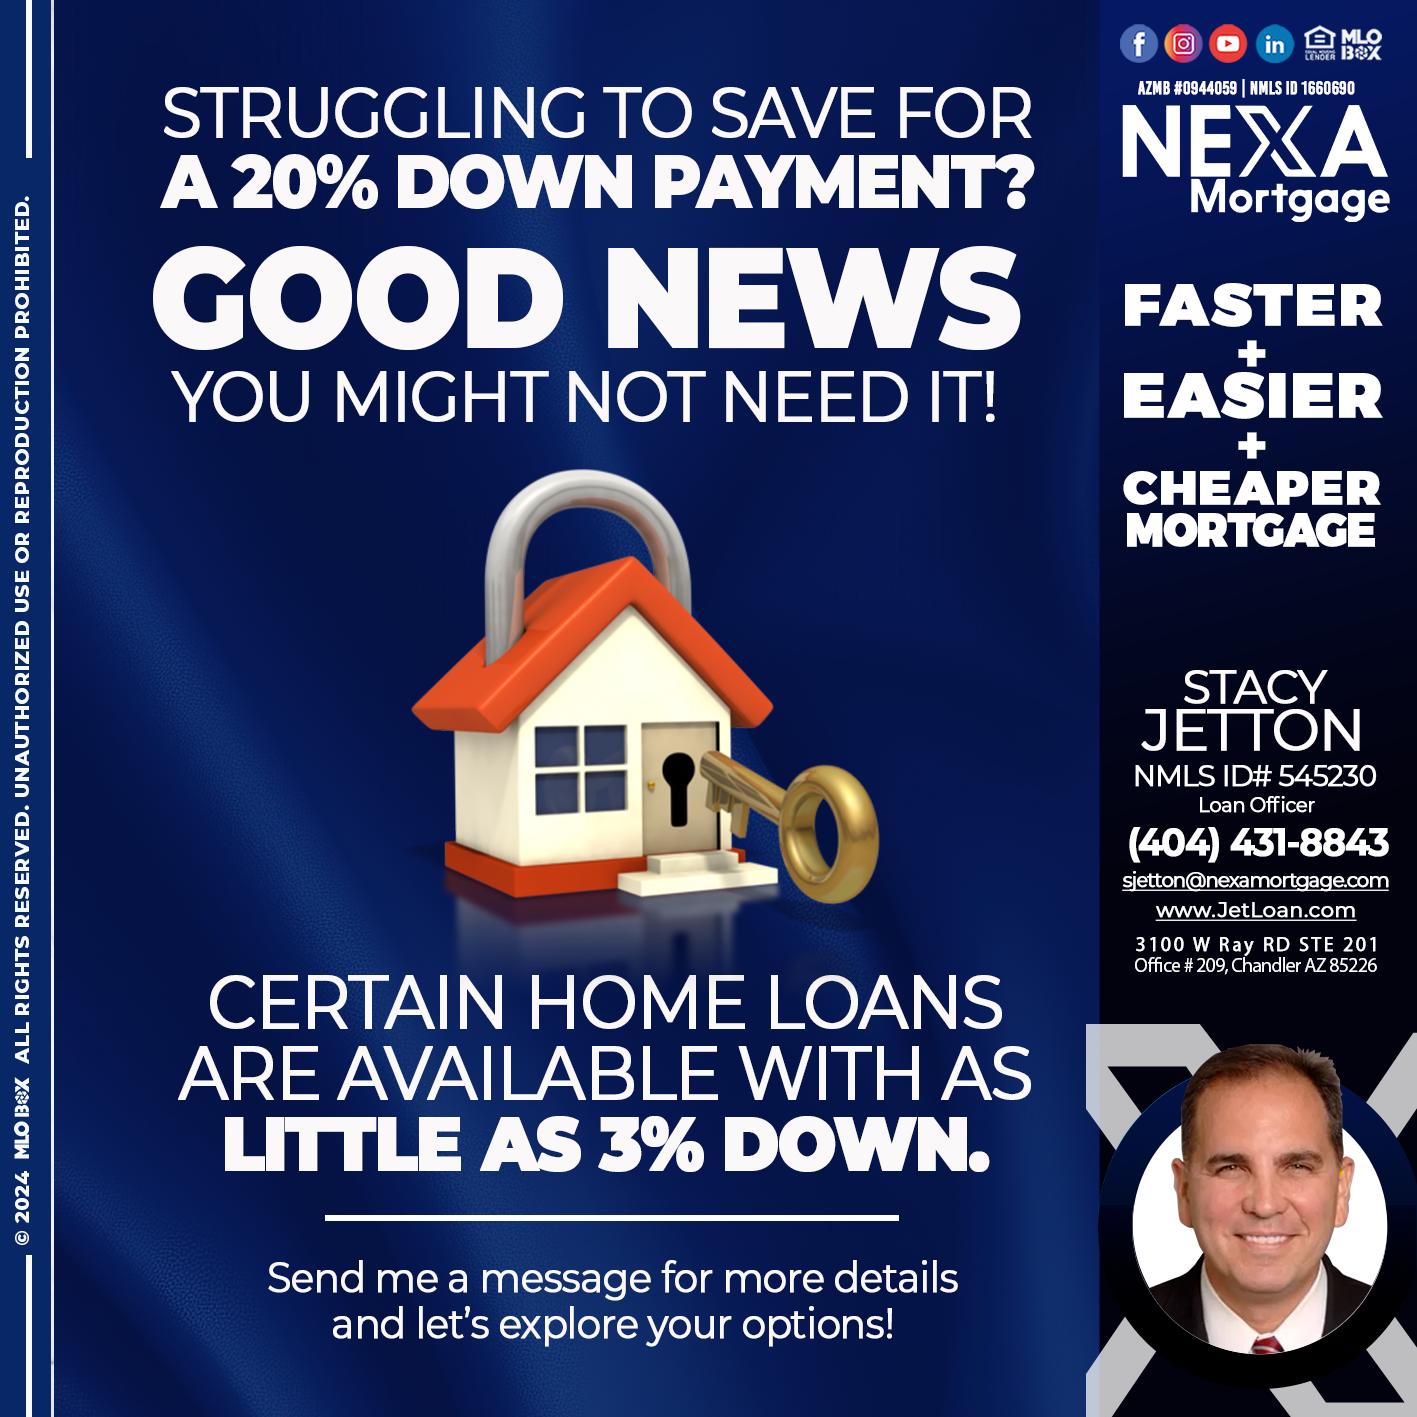 good news - Stacy Jetton -Sr. Mortgage Broker